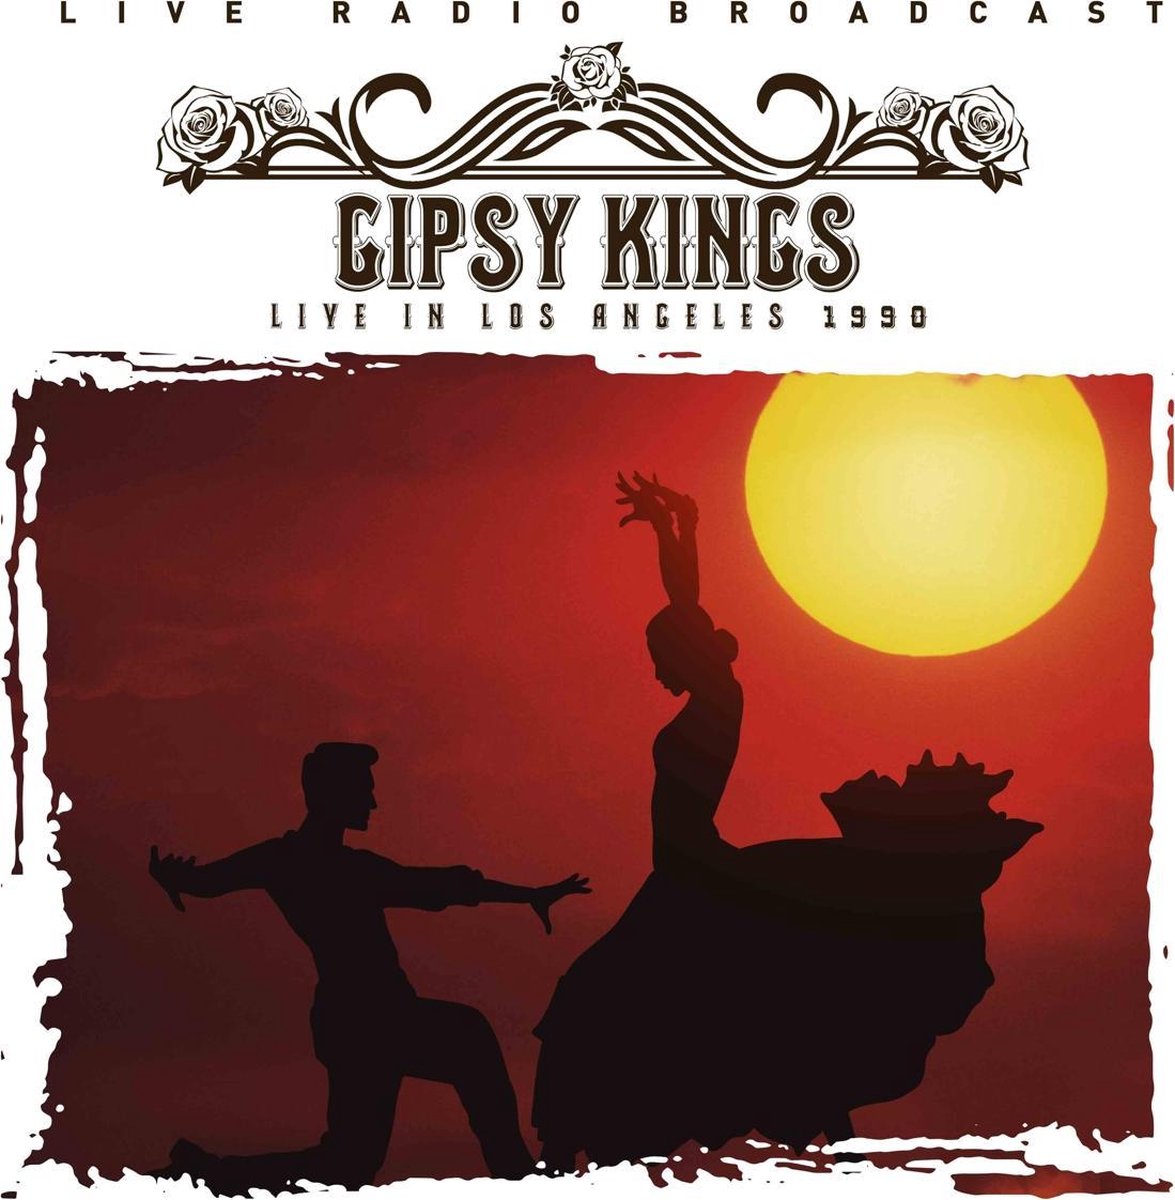 Best Of Live In Los Angeles 1990 (LP) - Gipsy Kings